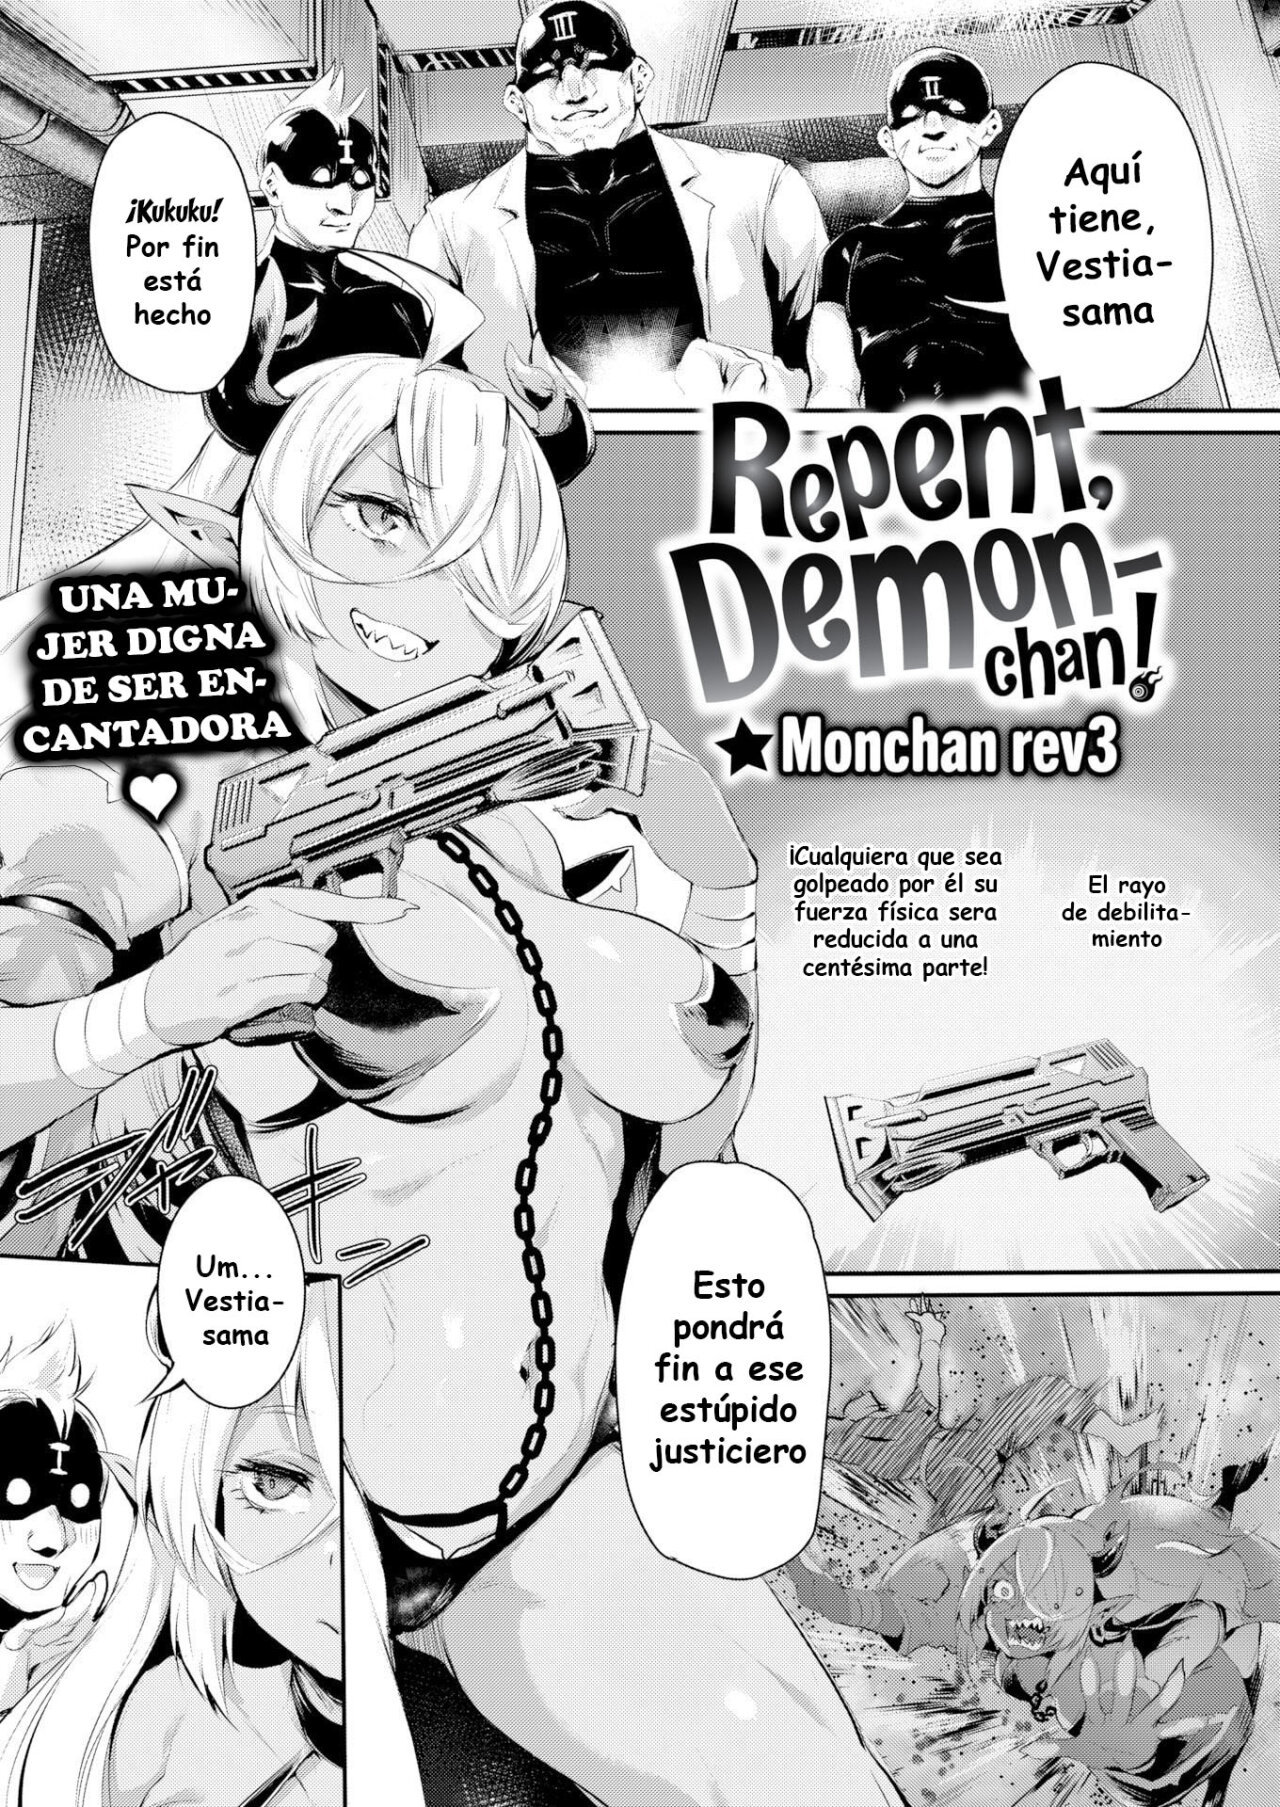 Repent Demon-chan! - iArrepientete Demonio-chan! - 1